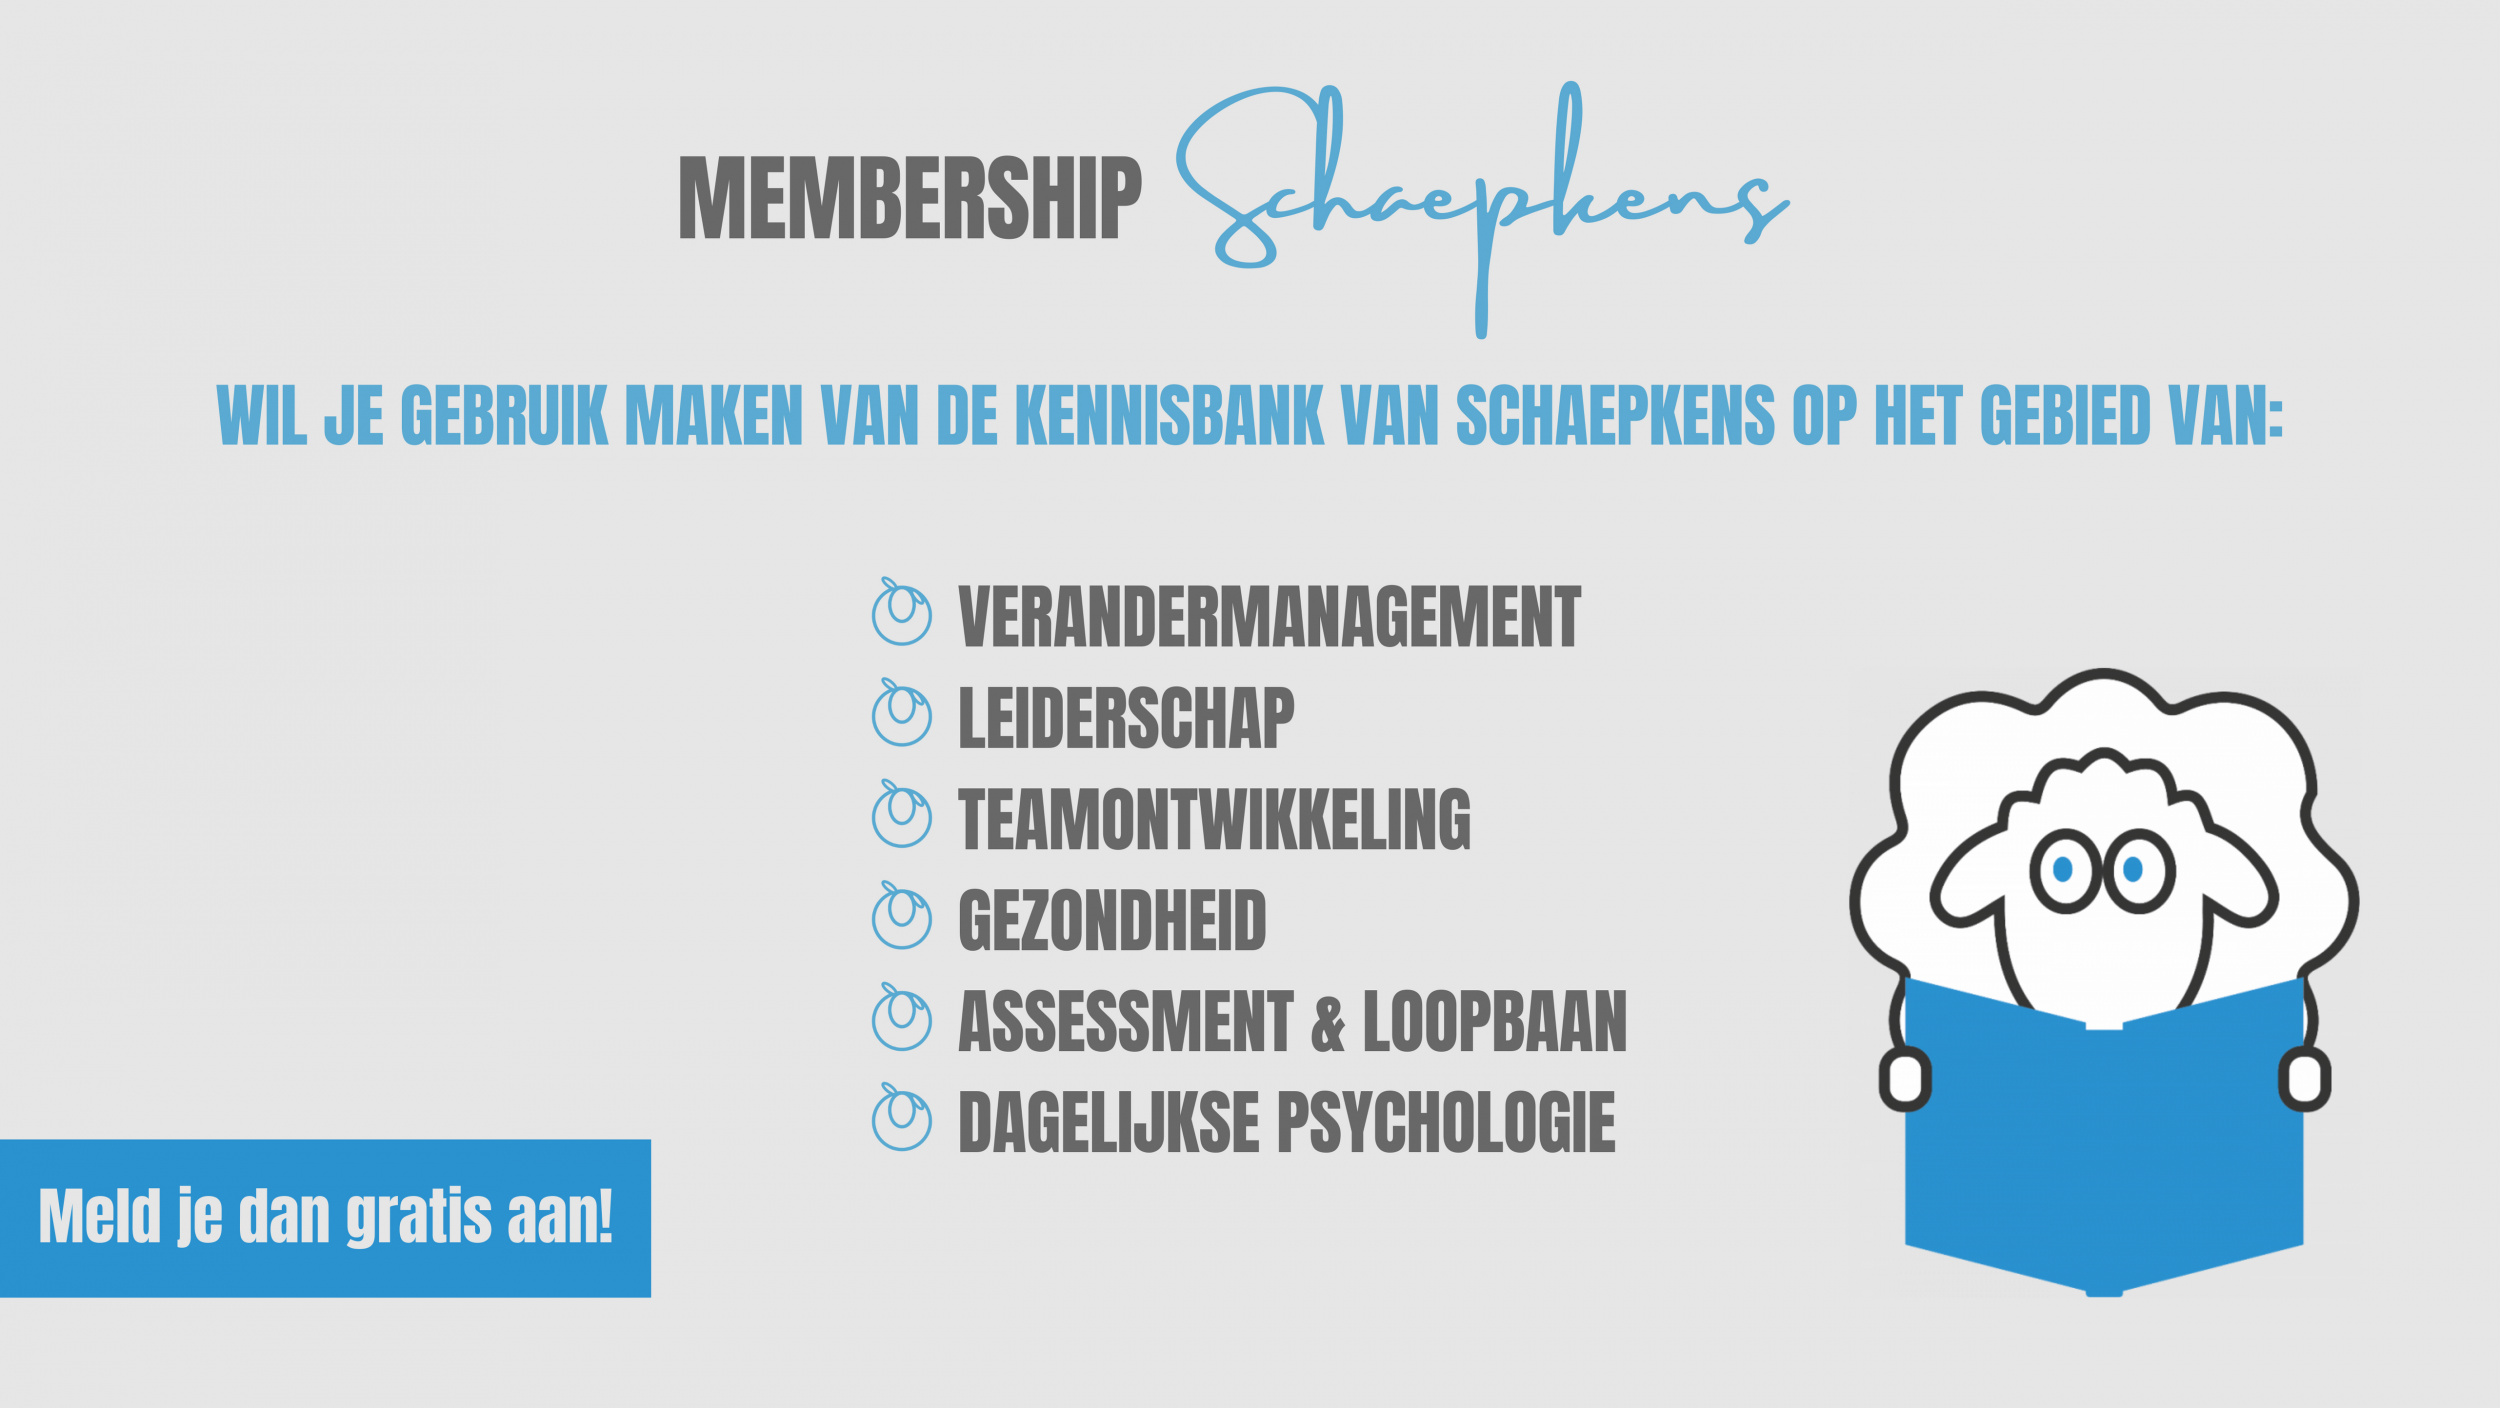 Membership Schaepkens website1.jpg